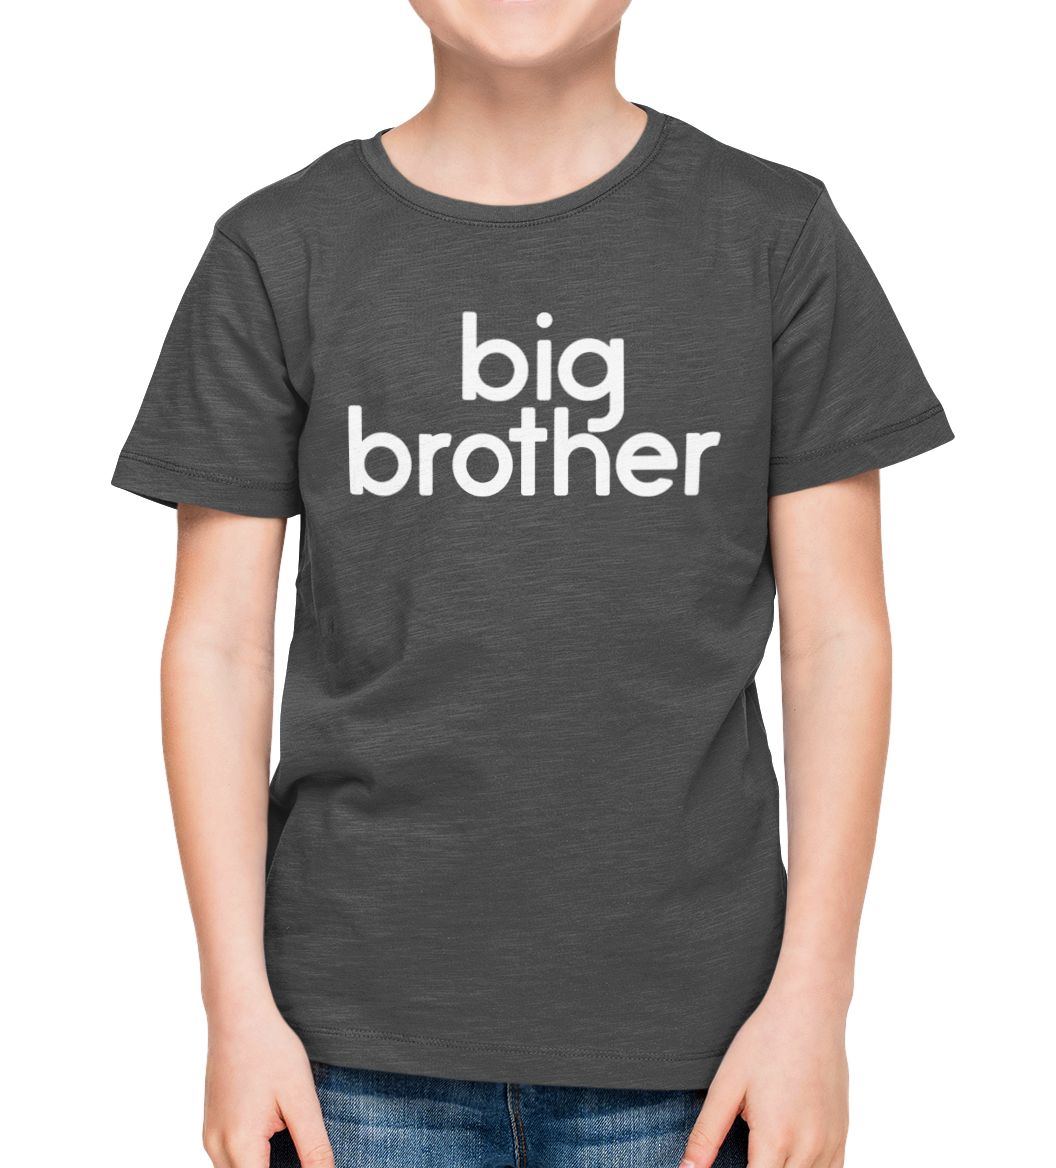 Big brother tee screen printed shirt 